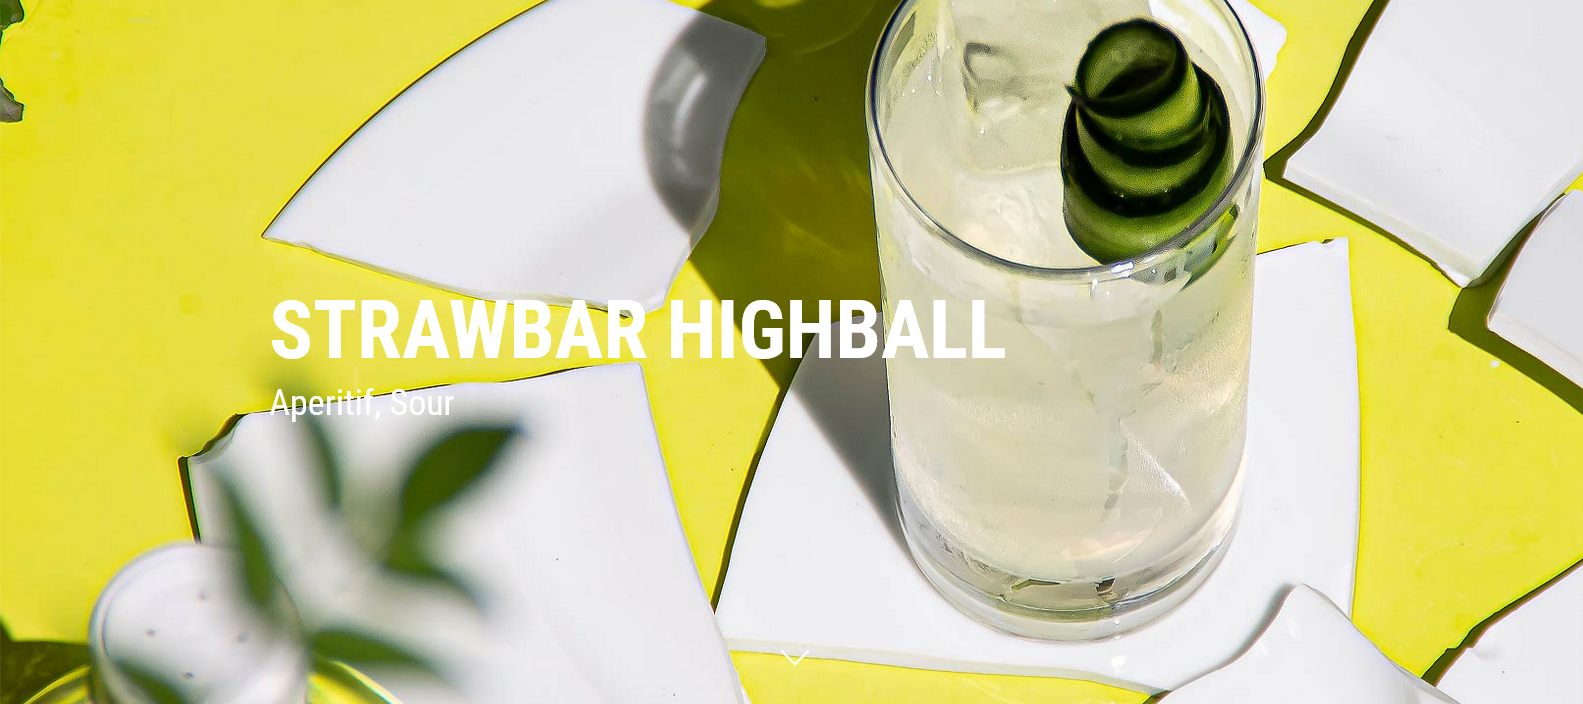 Strawbar Highball